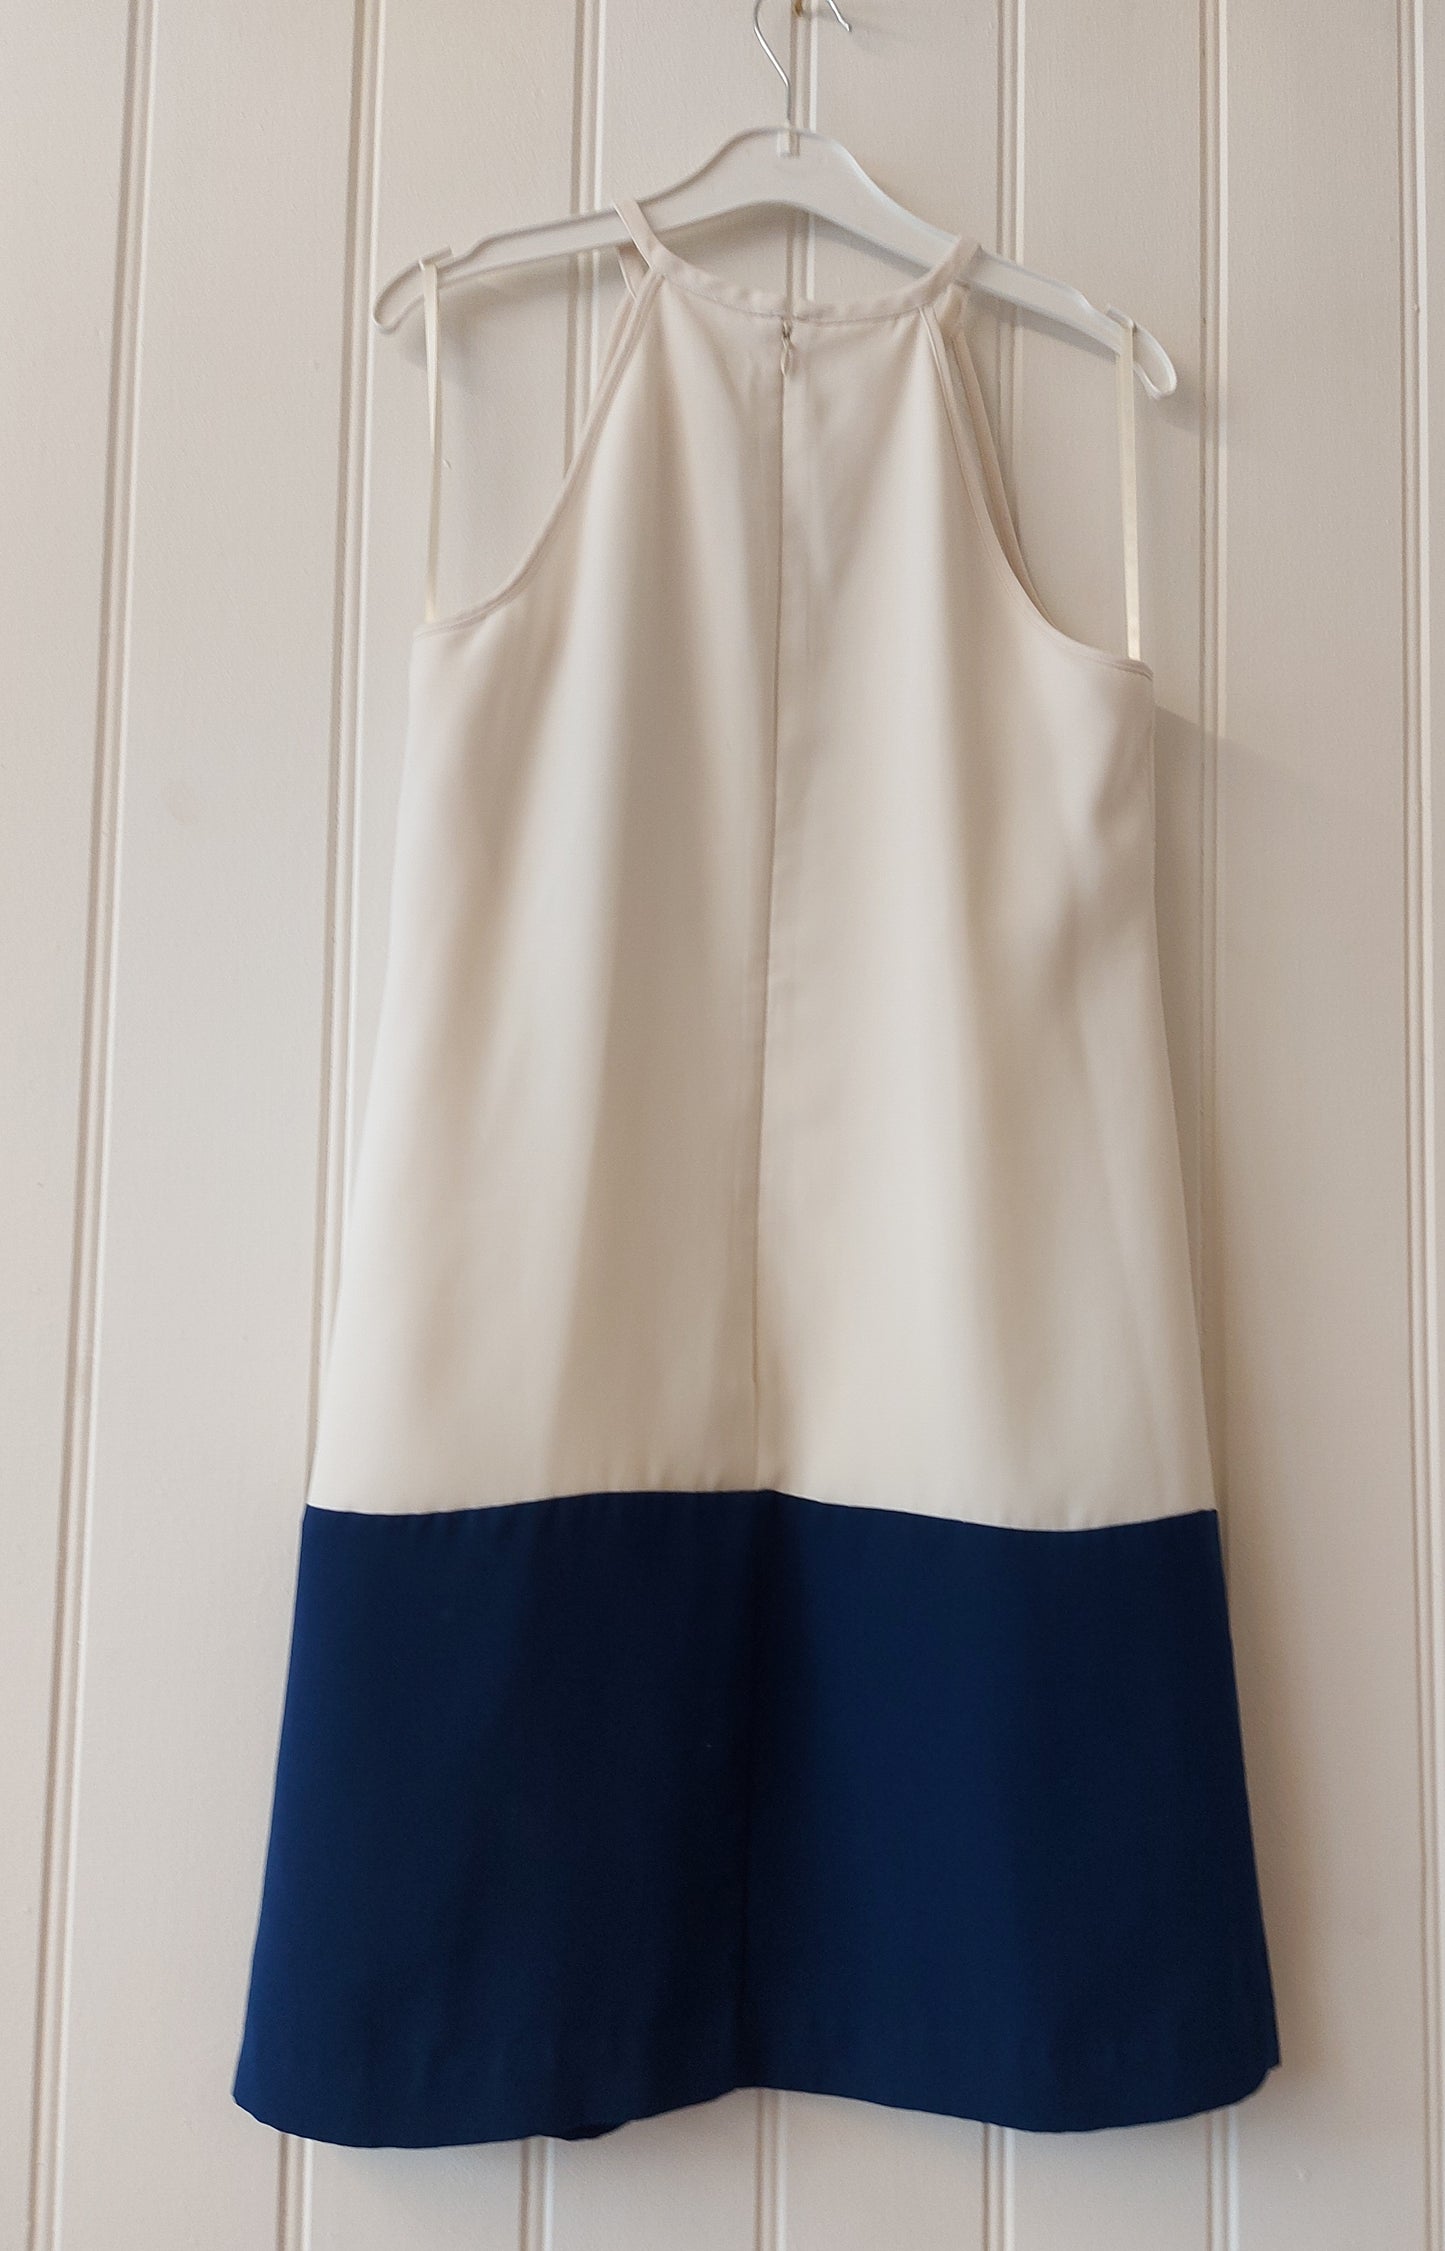 Banana Republic blue and white dress 8